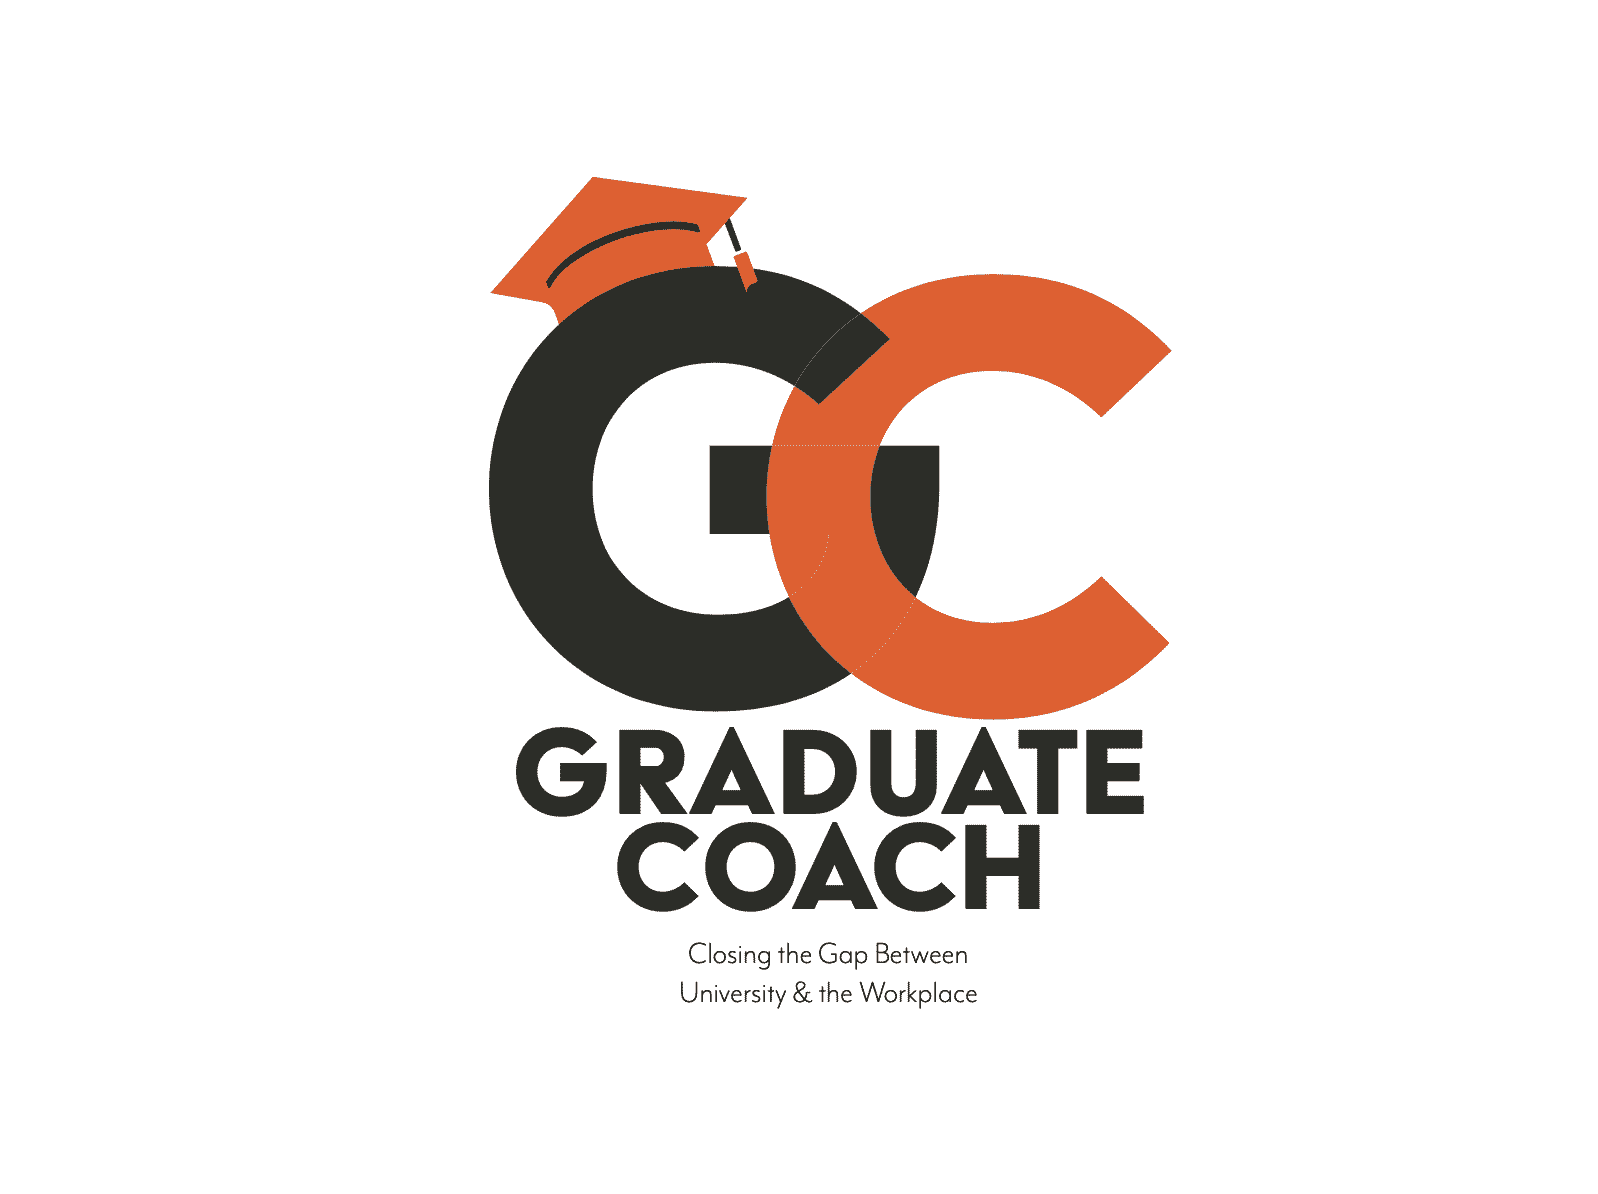 The Graduate coach logo